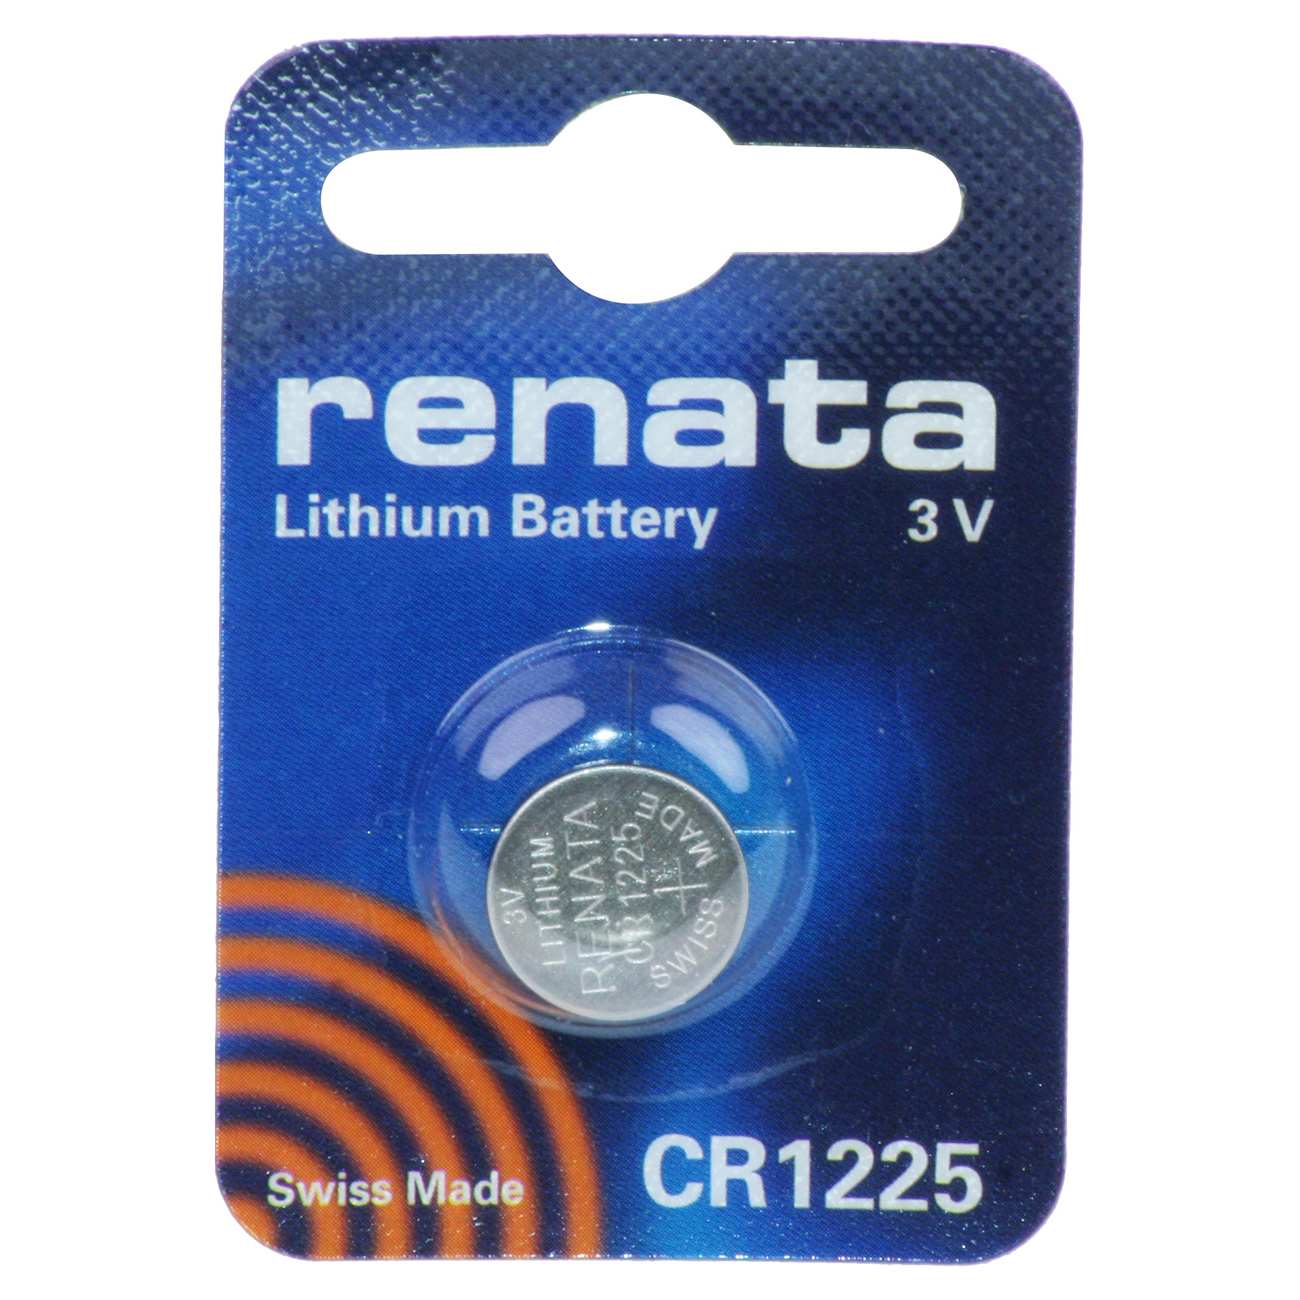 3 x Renata CR 1225 CR1225 3V Lithium Batterie Knopfzelle 48mAh im Blister NEU 